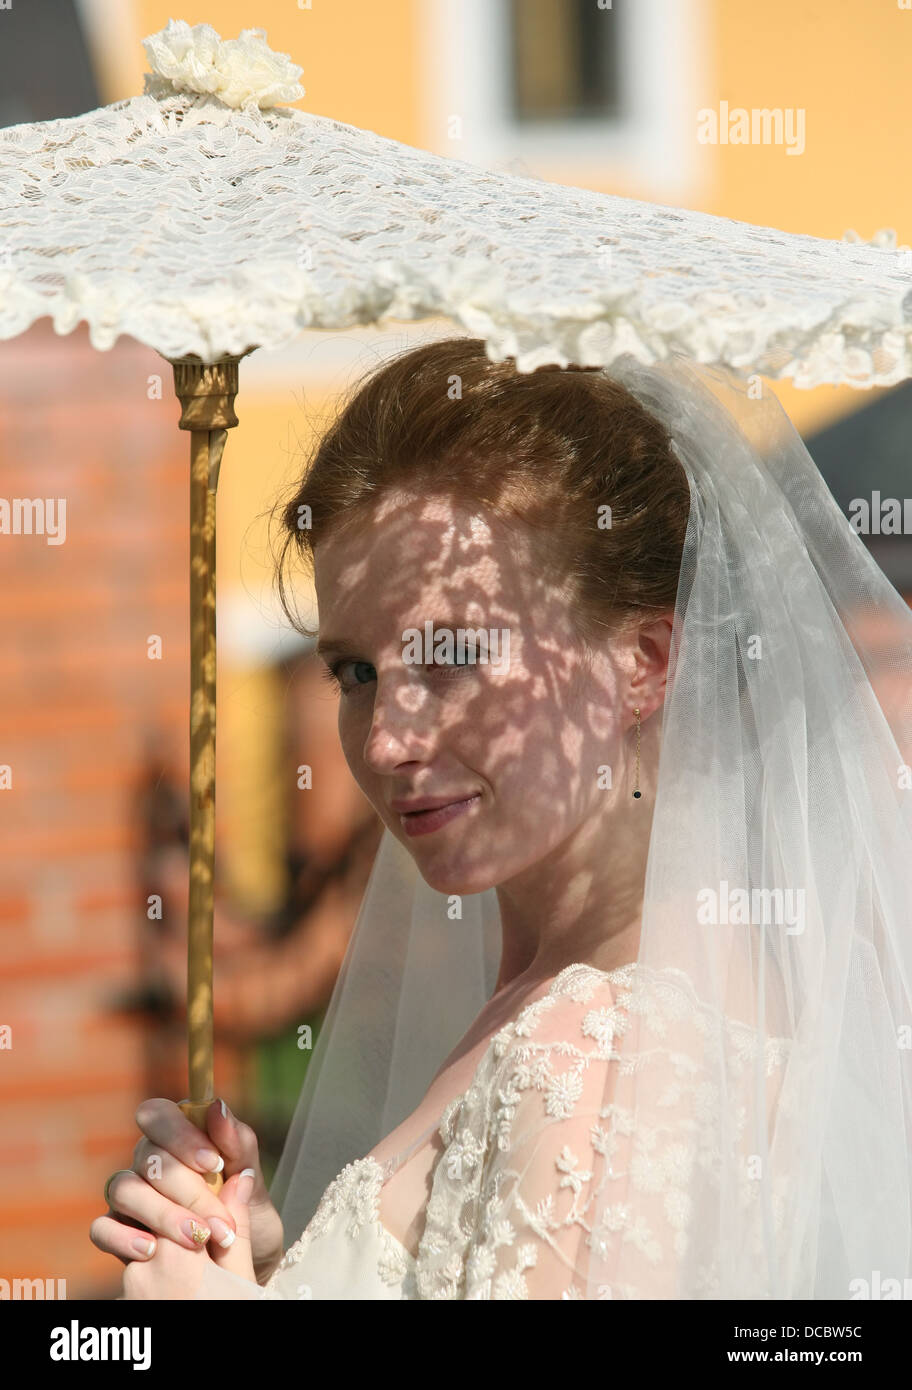 Beautiful bride Stock Photo